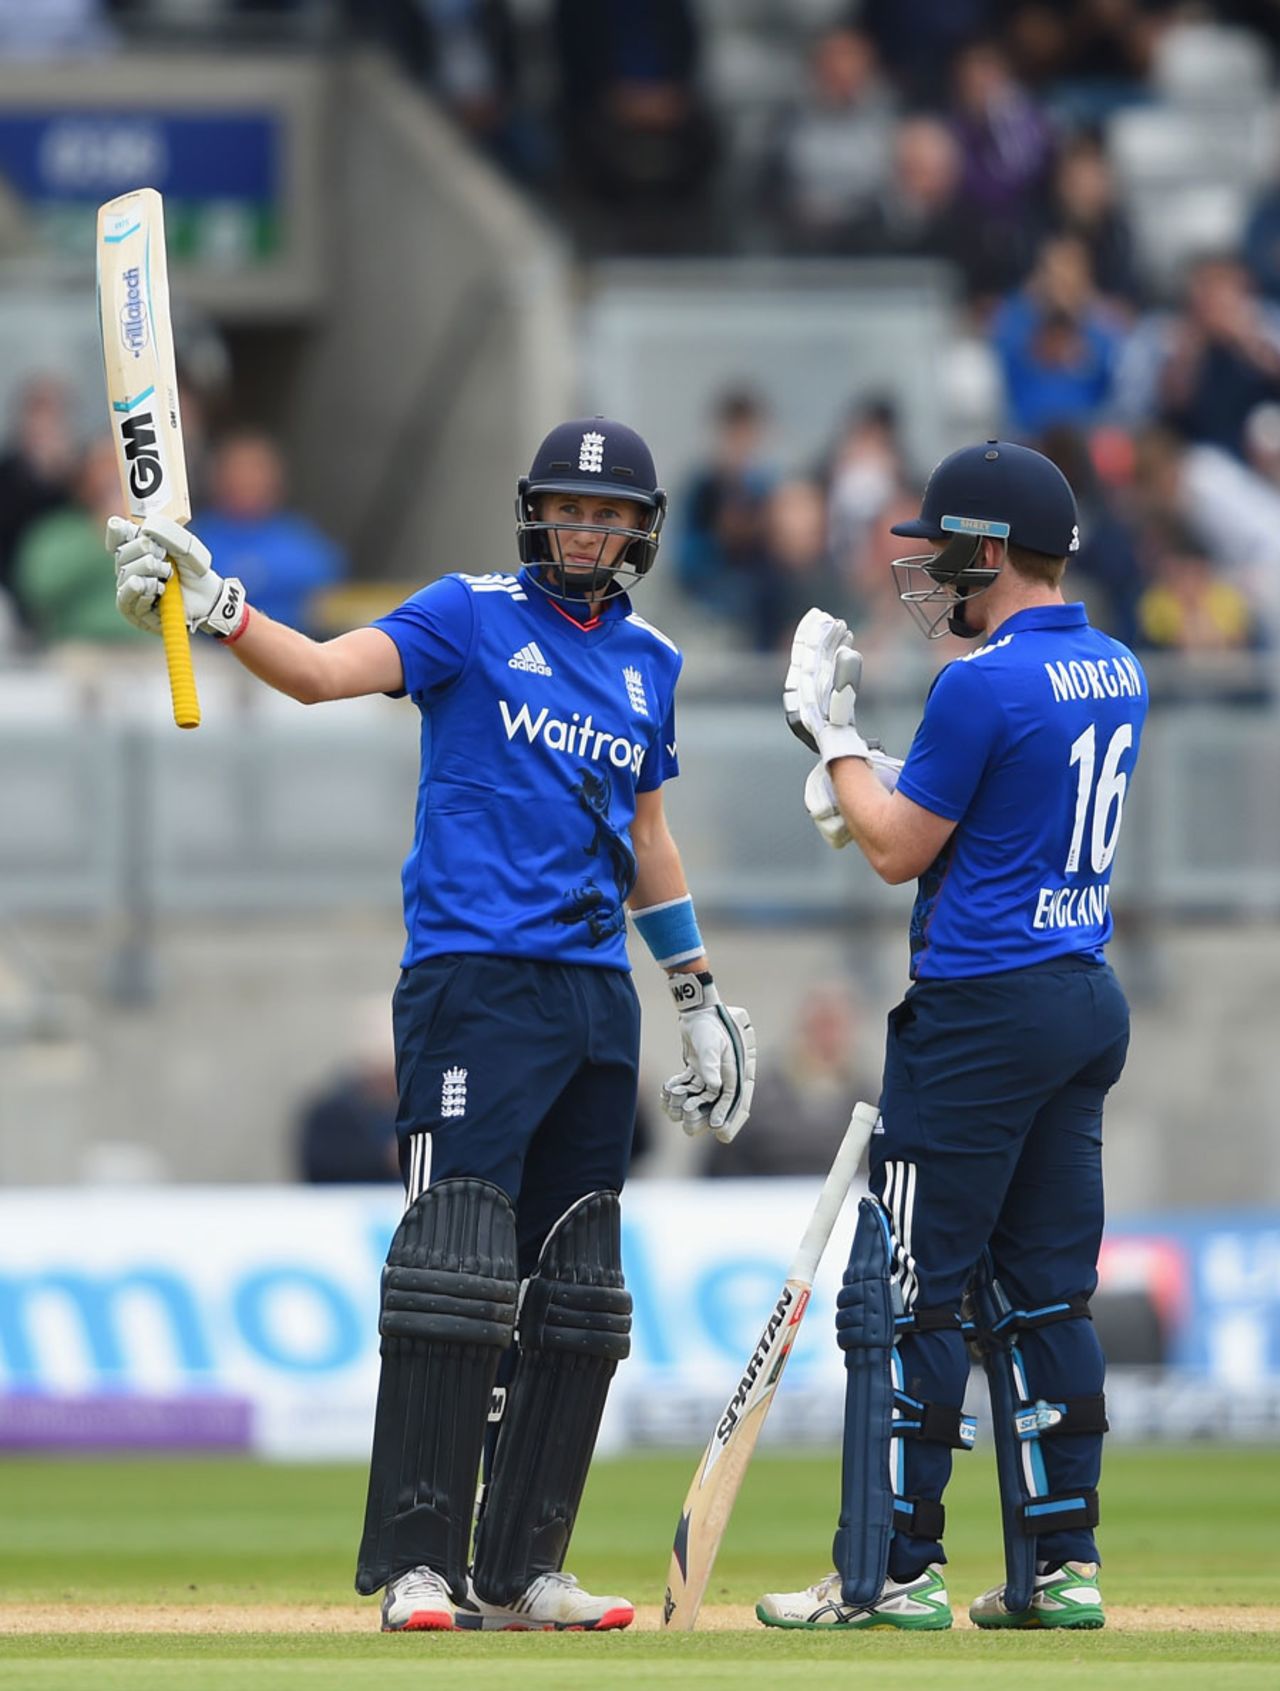 Joe Root progressed past 50 after a fast start, England v New Zealand, 1st ODI, Edgbaston, June 9, 2015